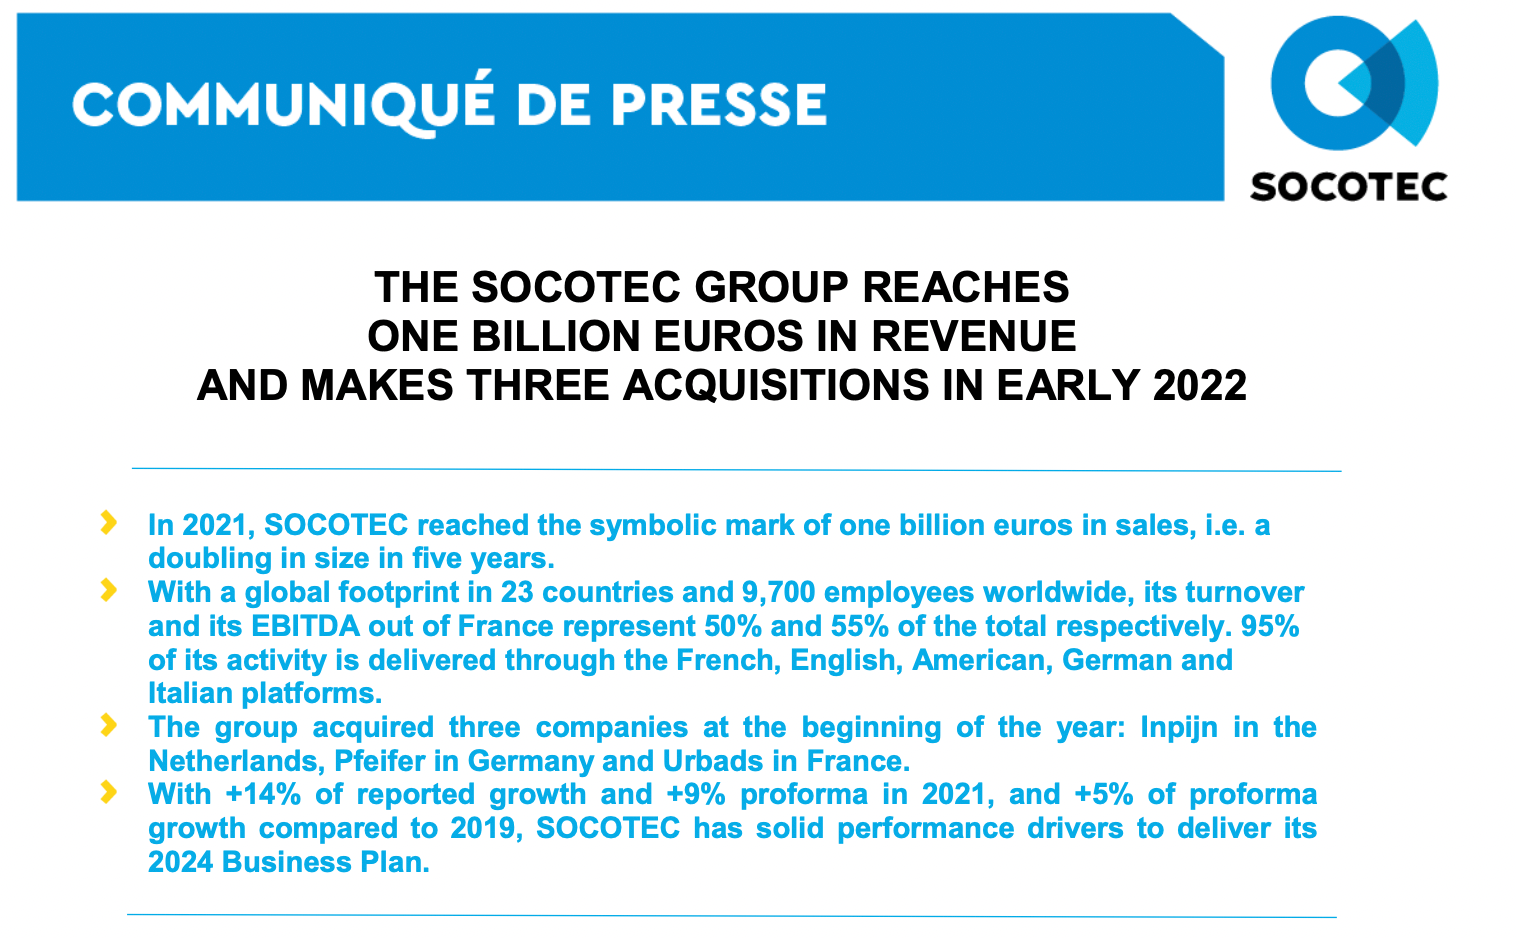 THE SOCOTEC GROUP REACHES ONE BILLION EUROS IN REVENUE